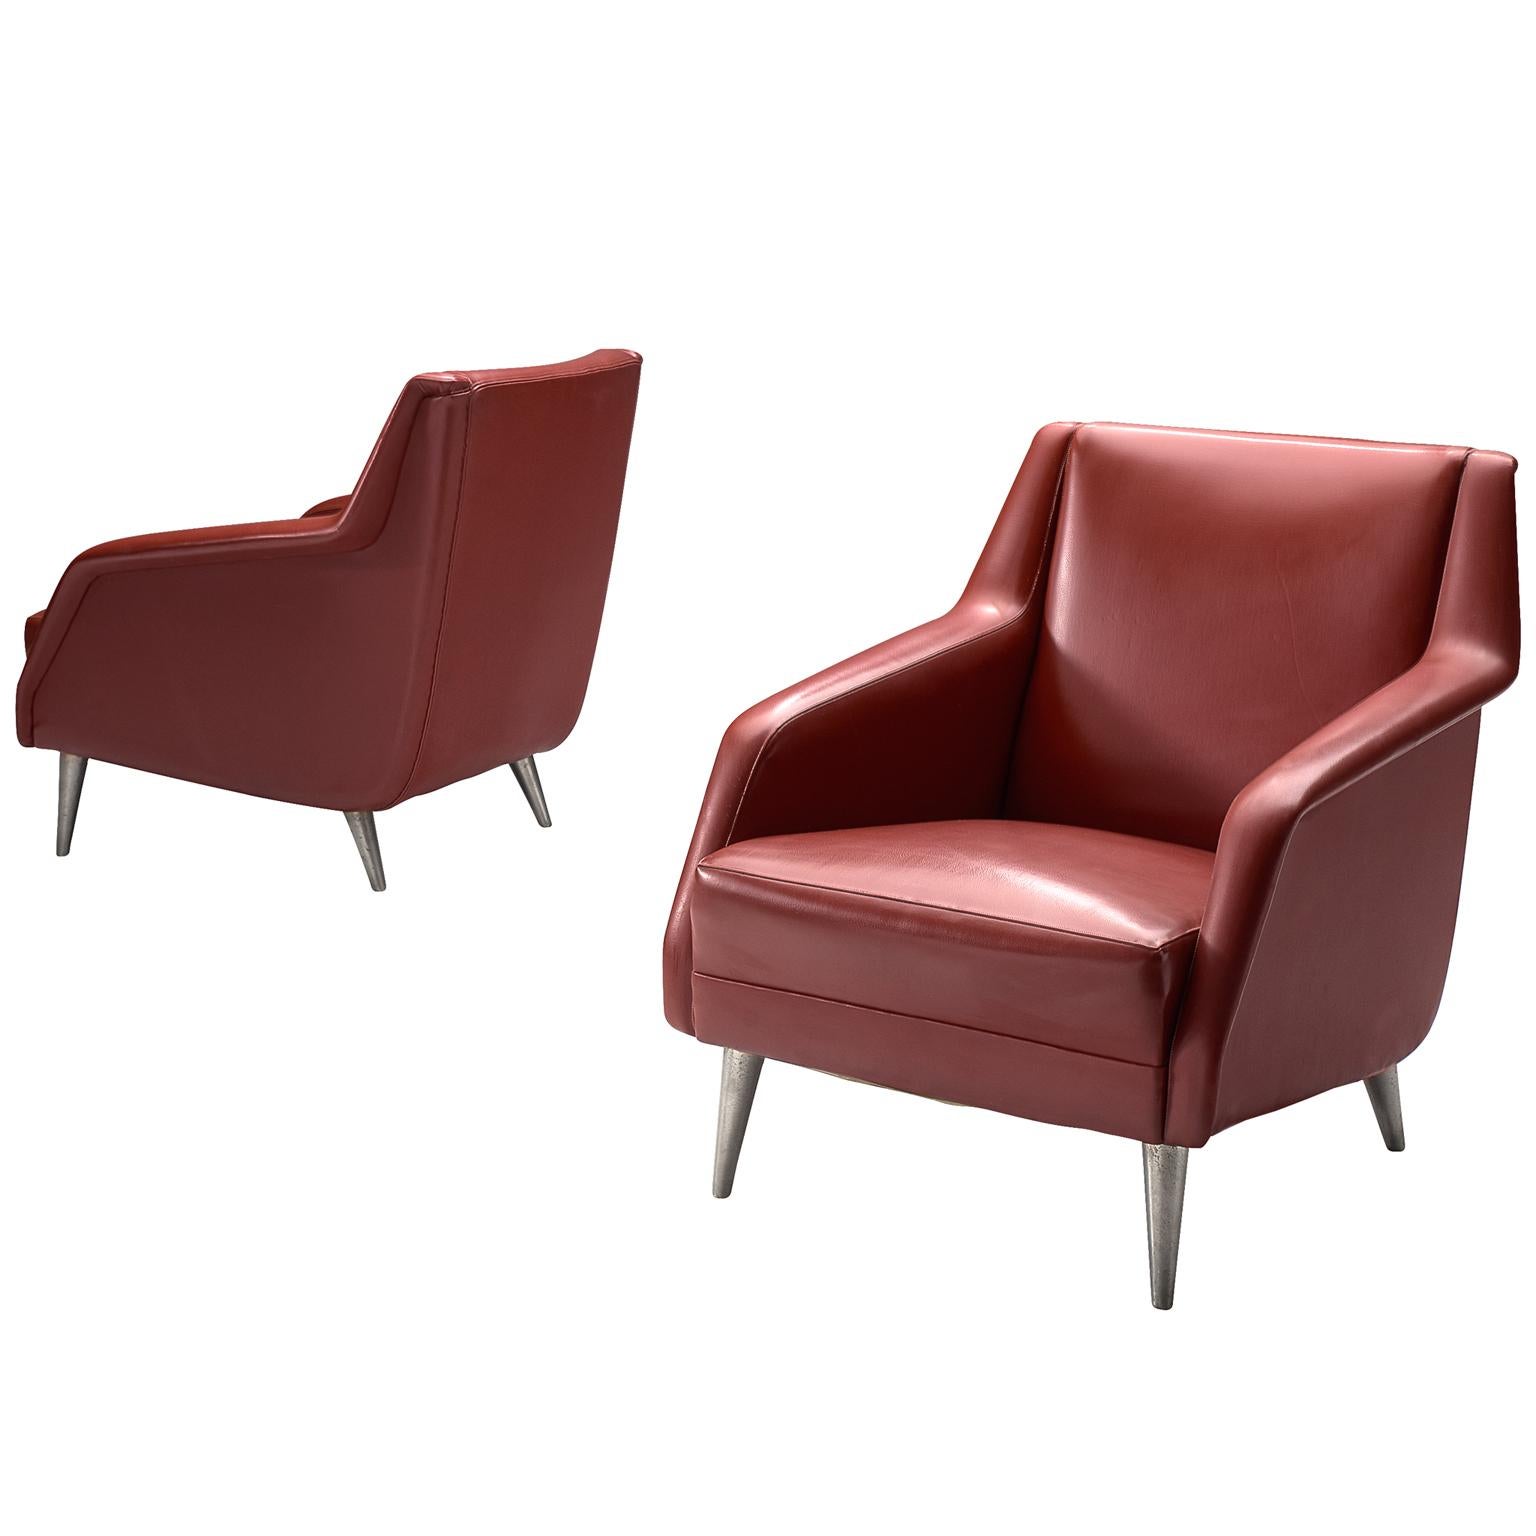 Carlo de Carli Classic Red Lounge Chairs